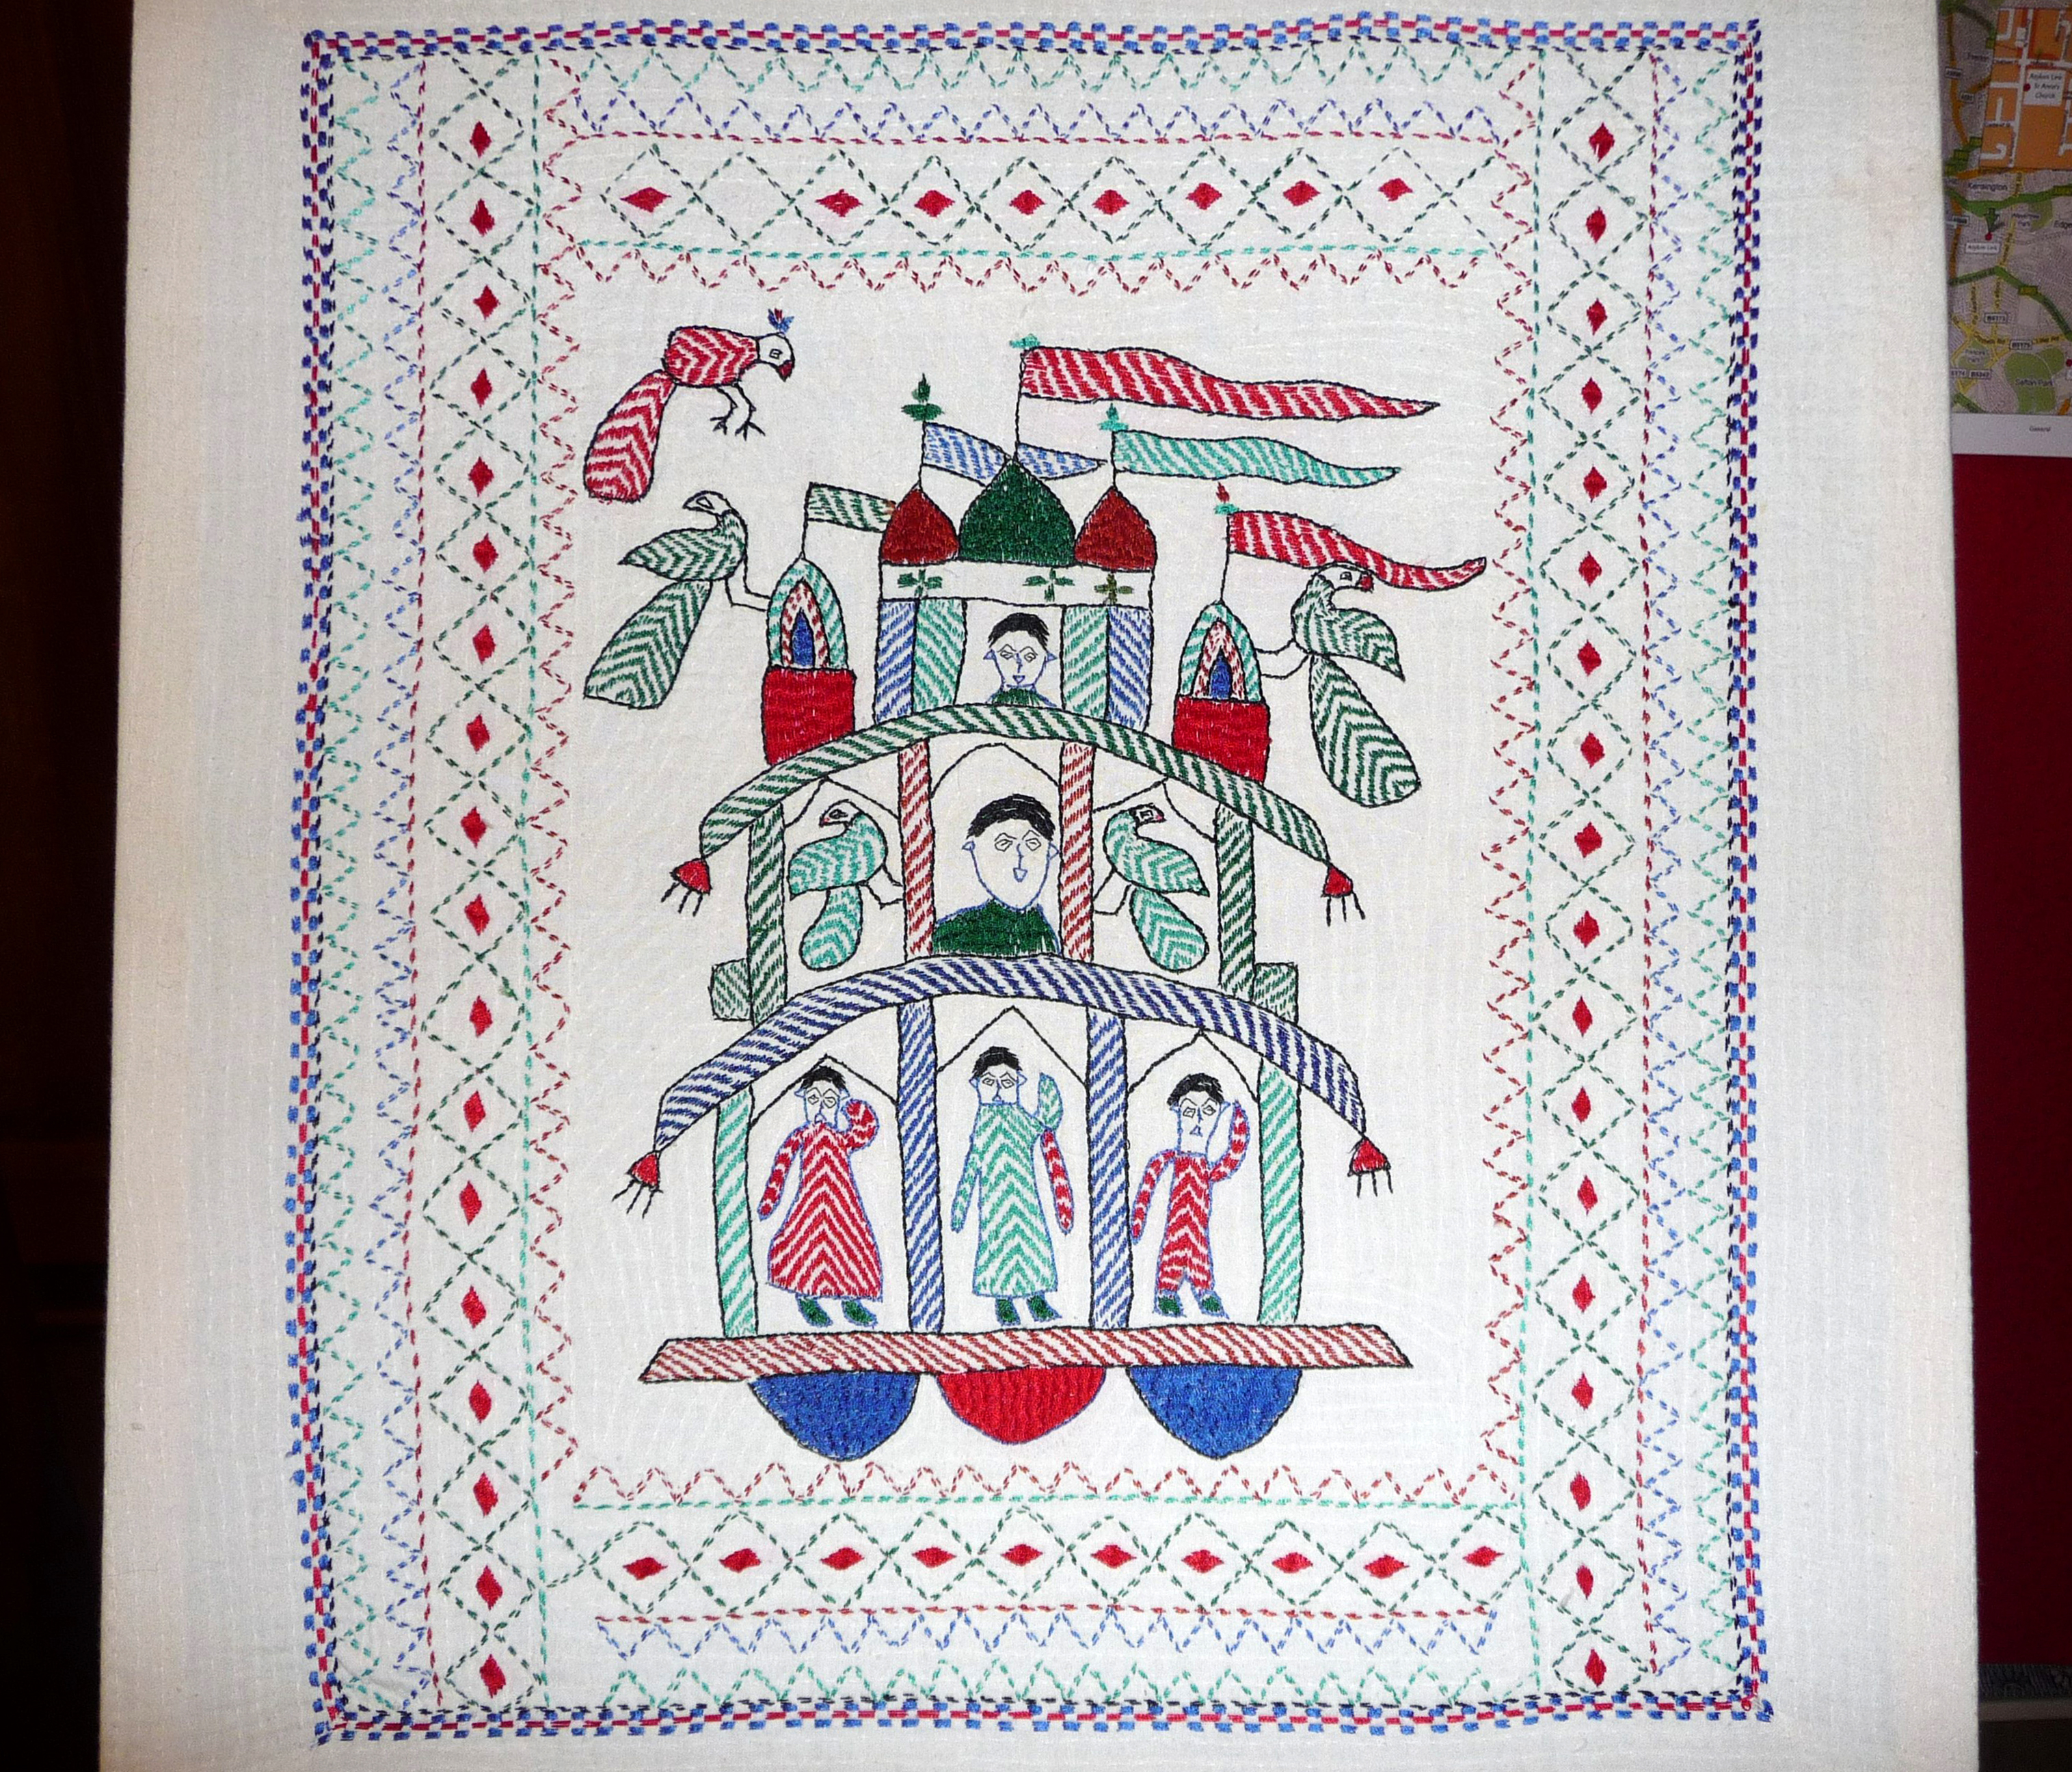 kantha embroidery made in Bangladesh